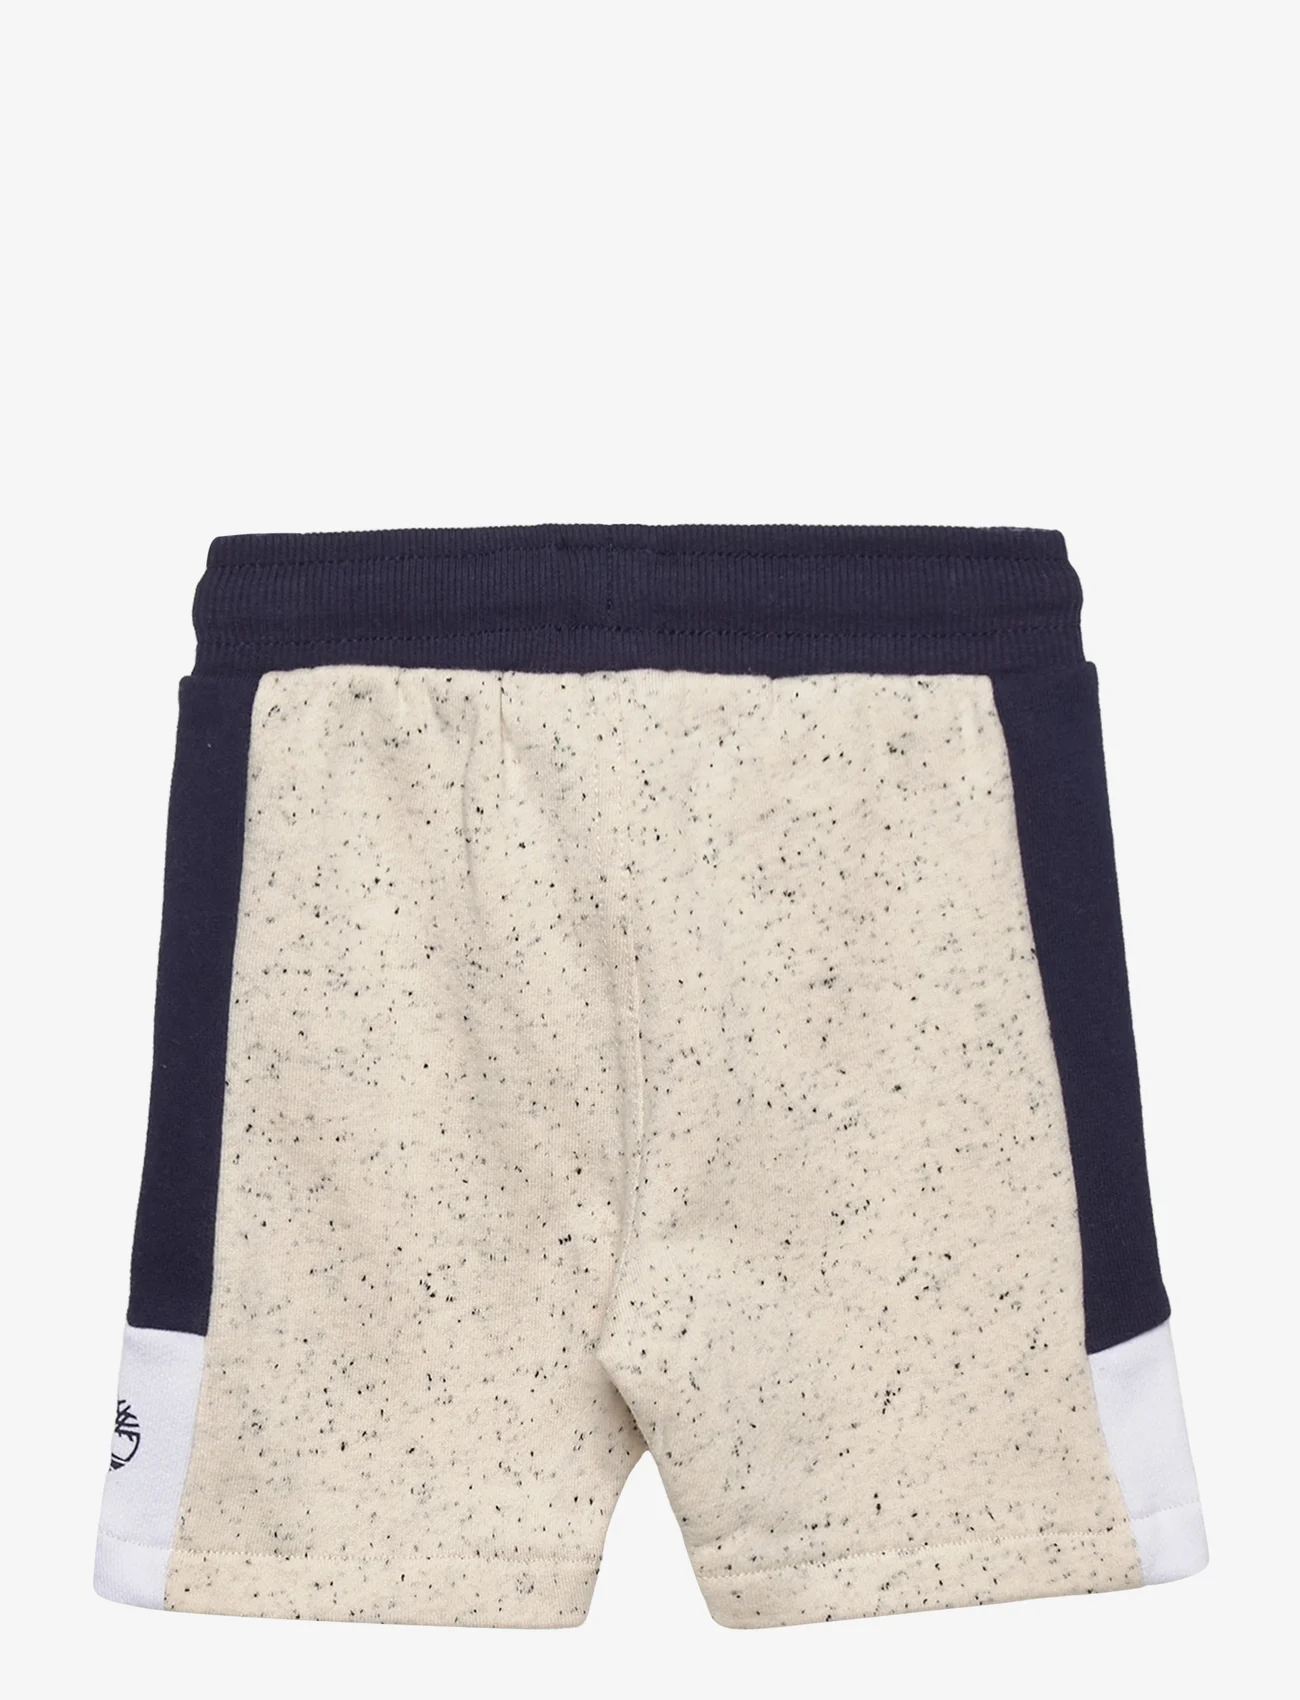 Timberland - BERMUDA SHORTS - sweat shorts - chine beige - 1